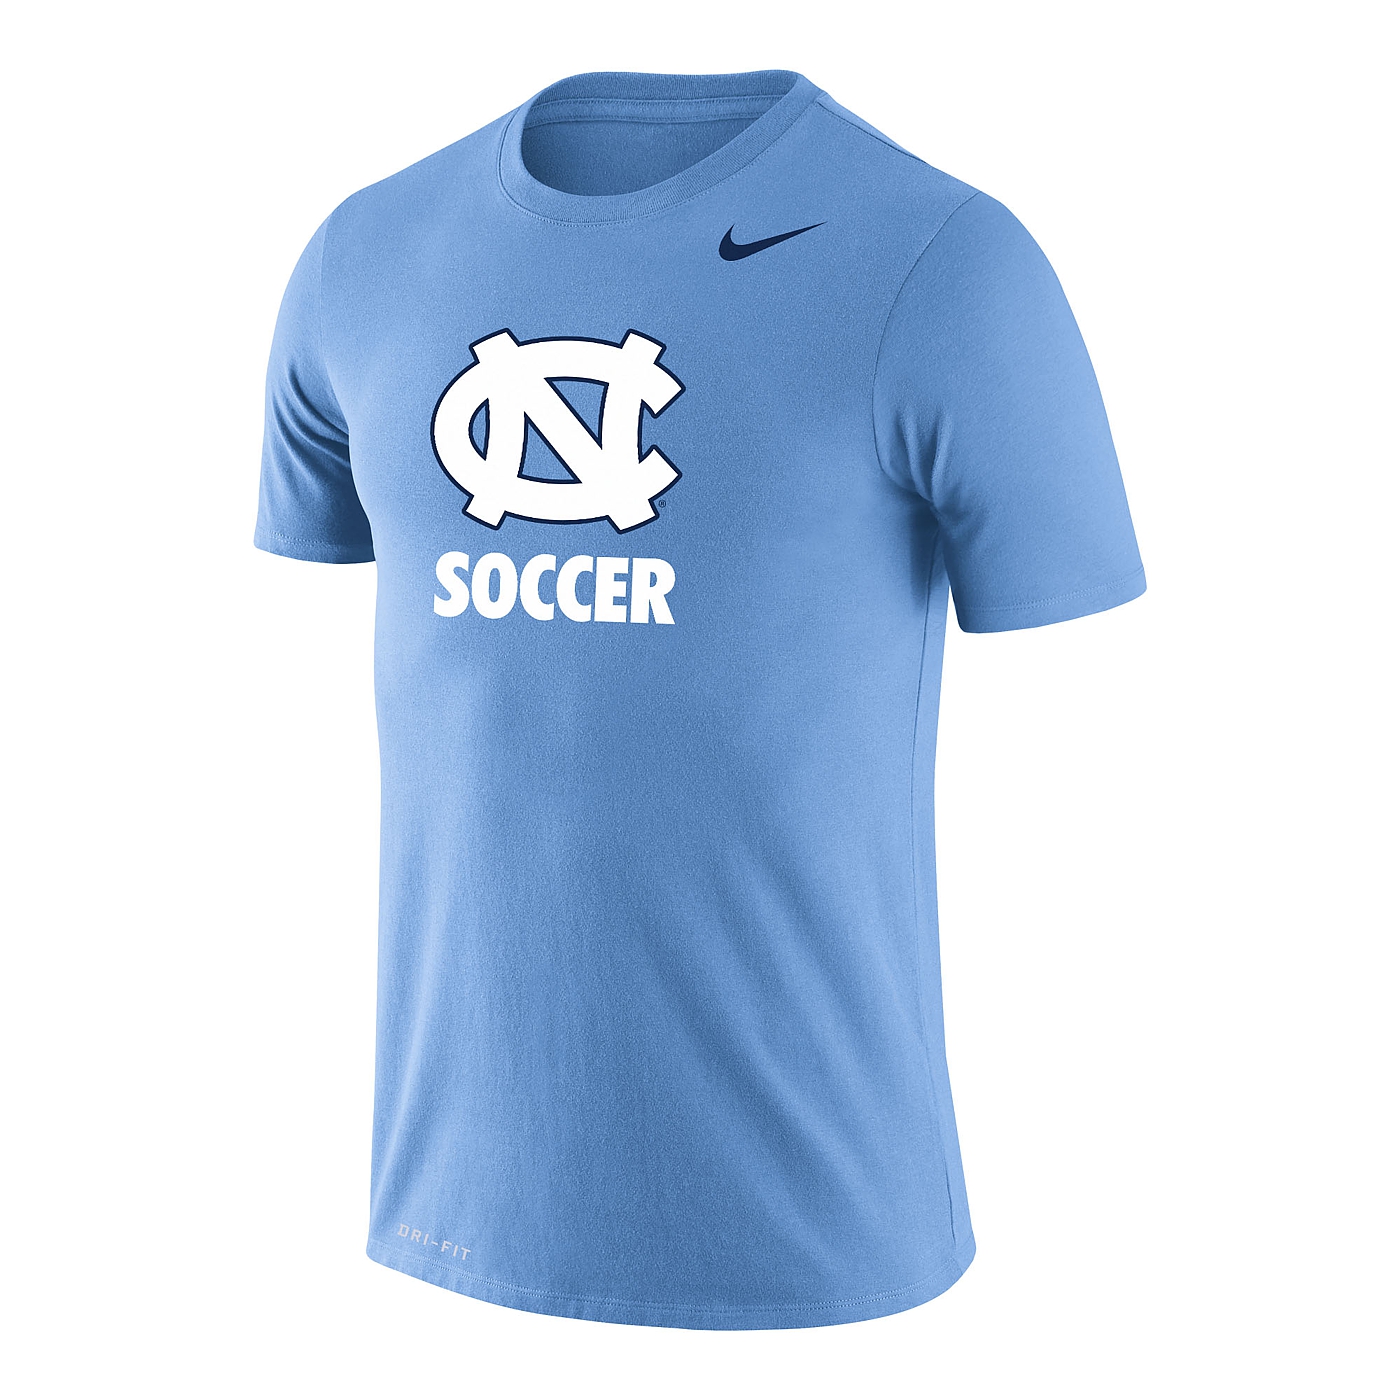 Johnny T-shirt - North Carolina Tar Heels - Nike Logo T (CB) by Nike